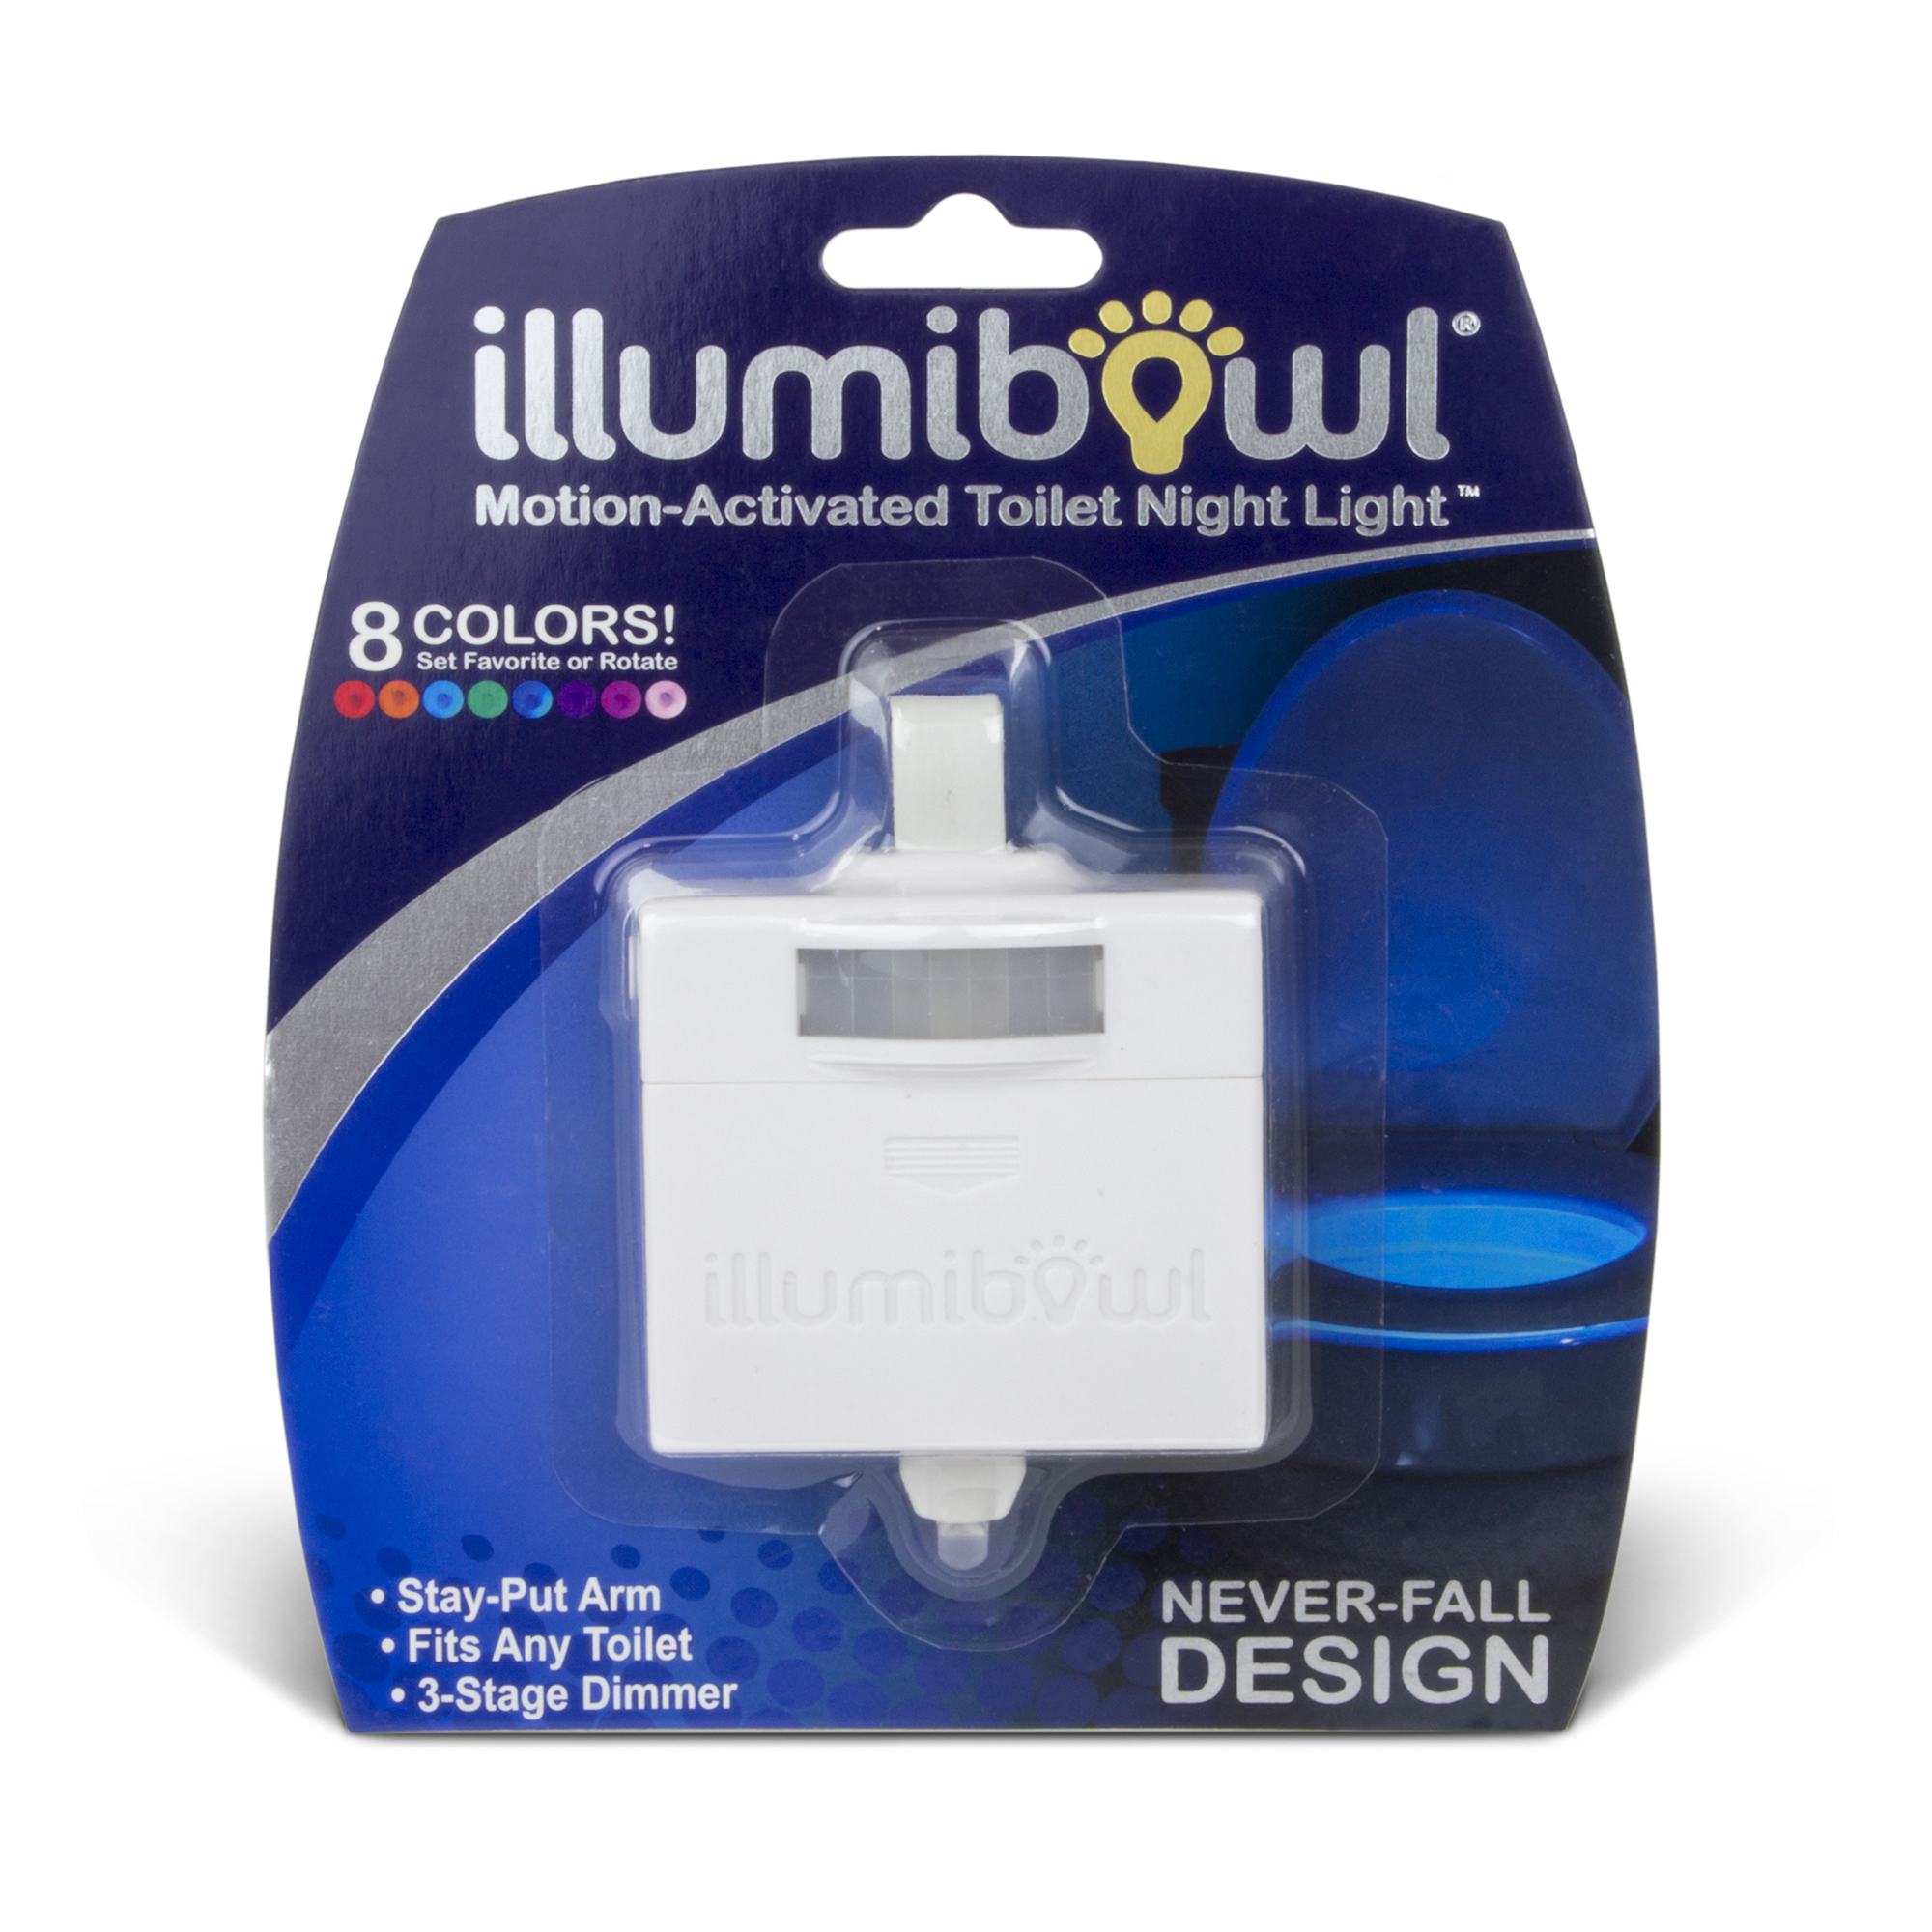 Illumibowl Motion-Activated Bathroom Light, Multi-Color LED - image 5 of 8